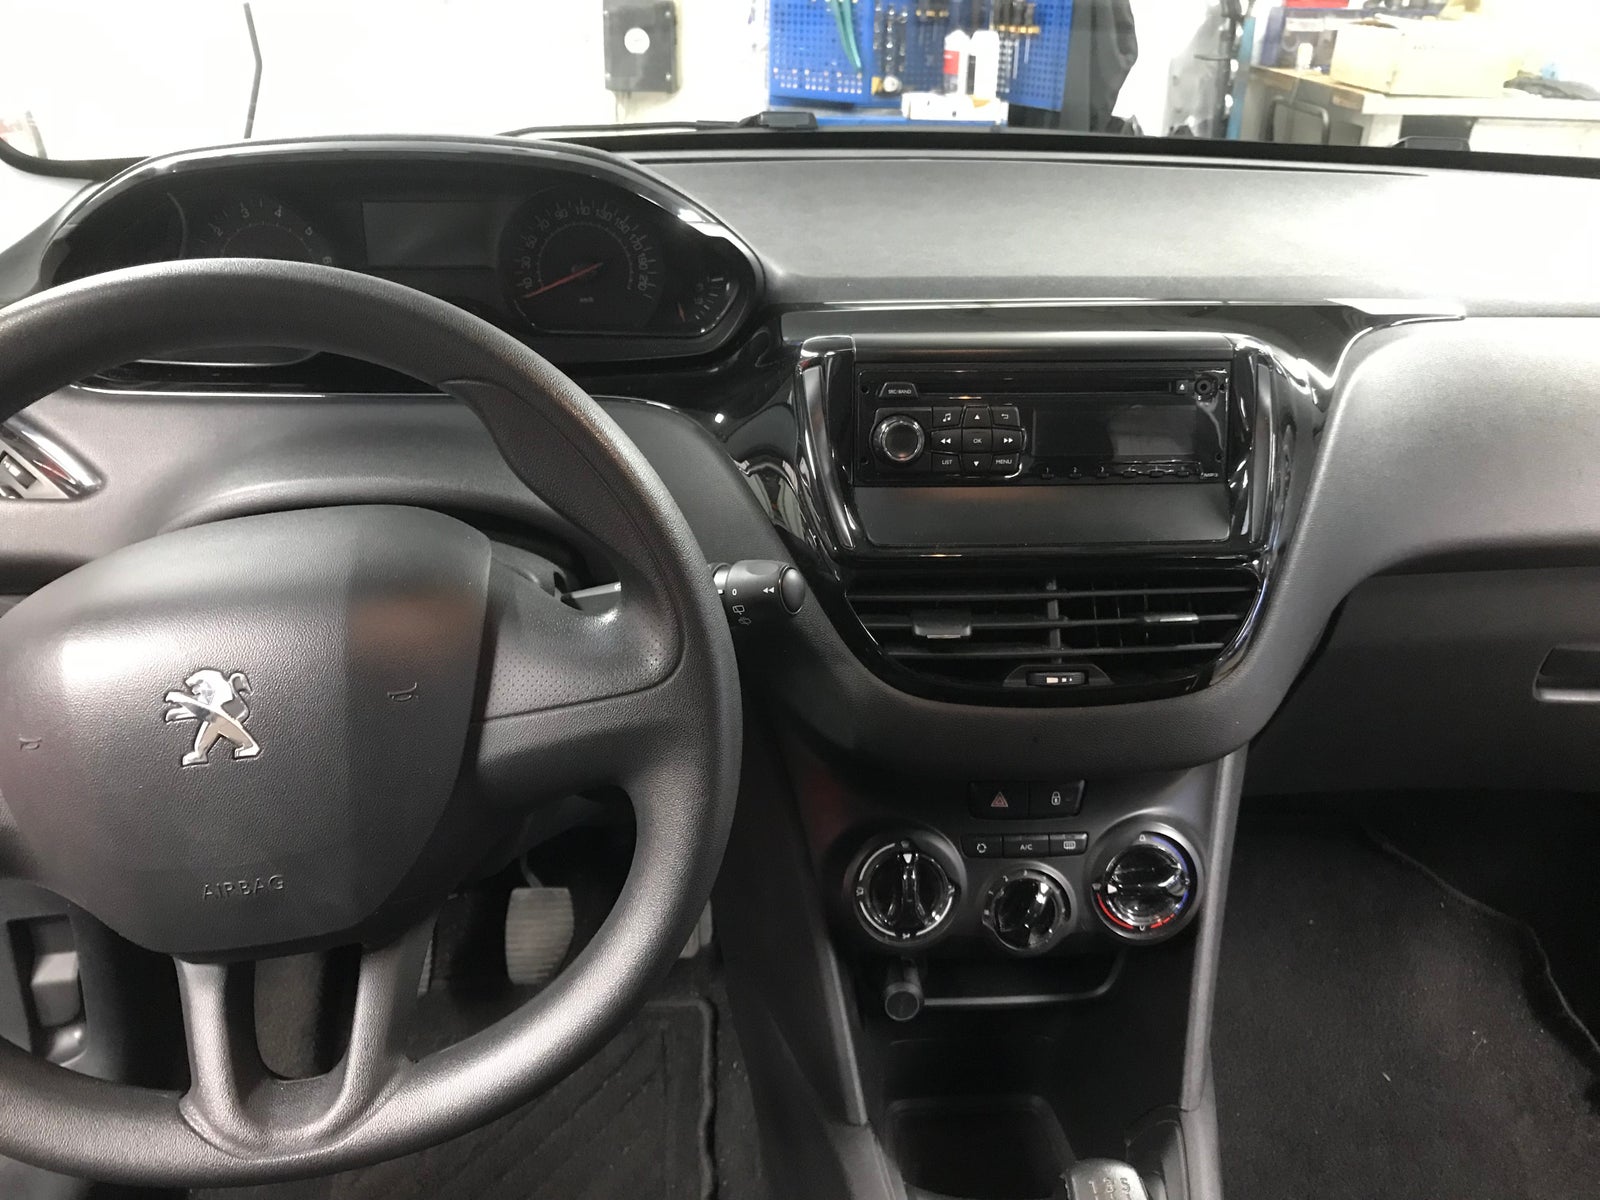 Nysynet Peugeot 208 med lavt kilometertal